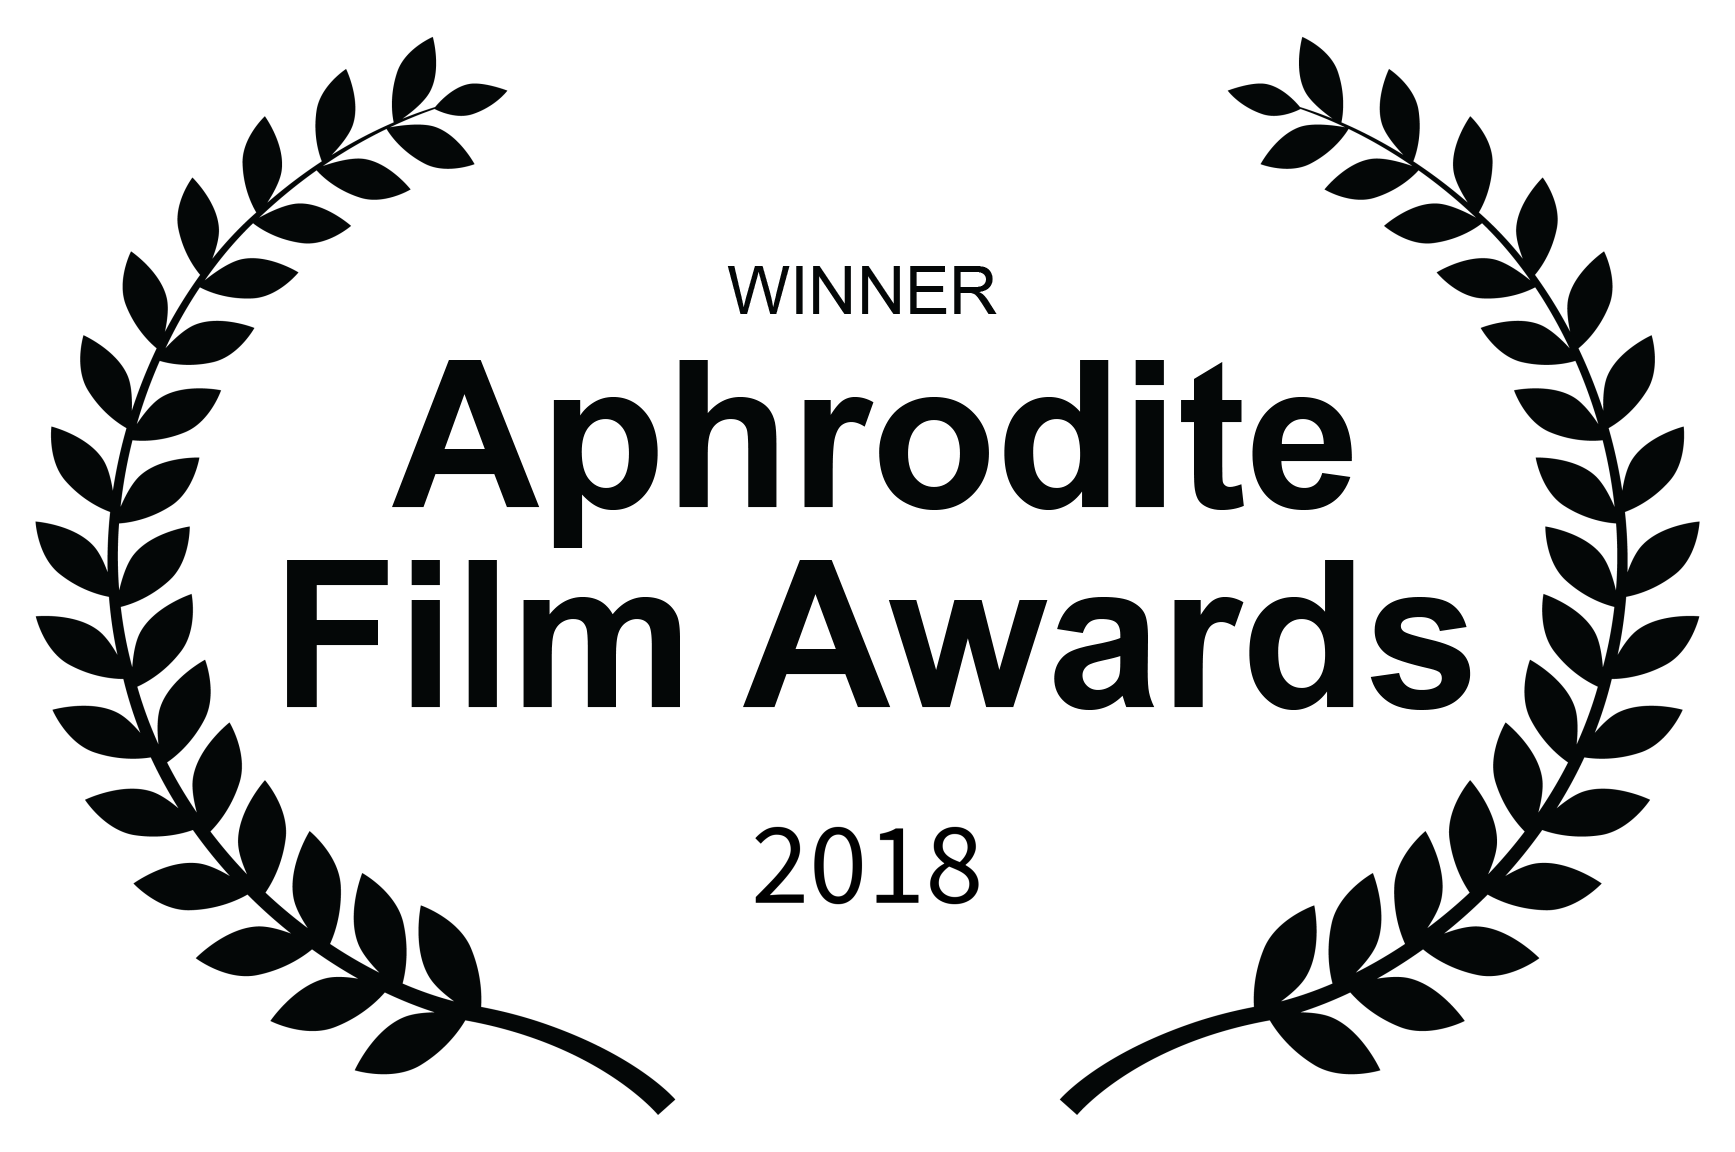 Aphrodite film awards winner if i could run movie